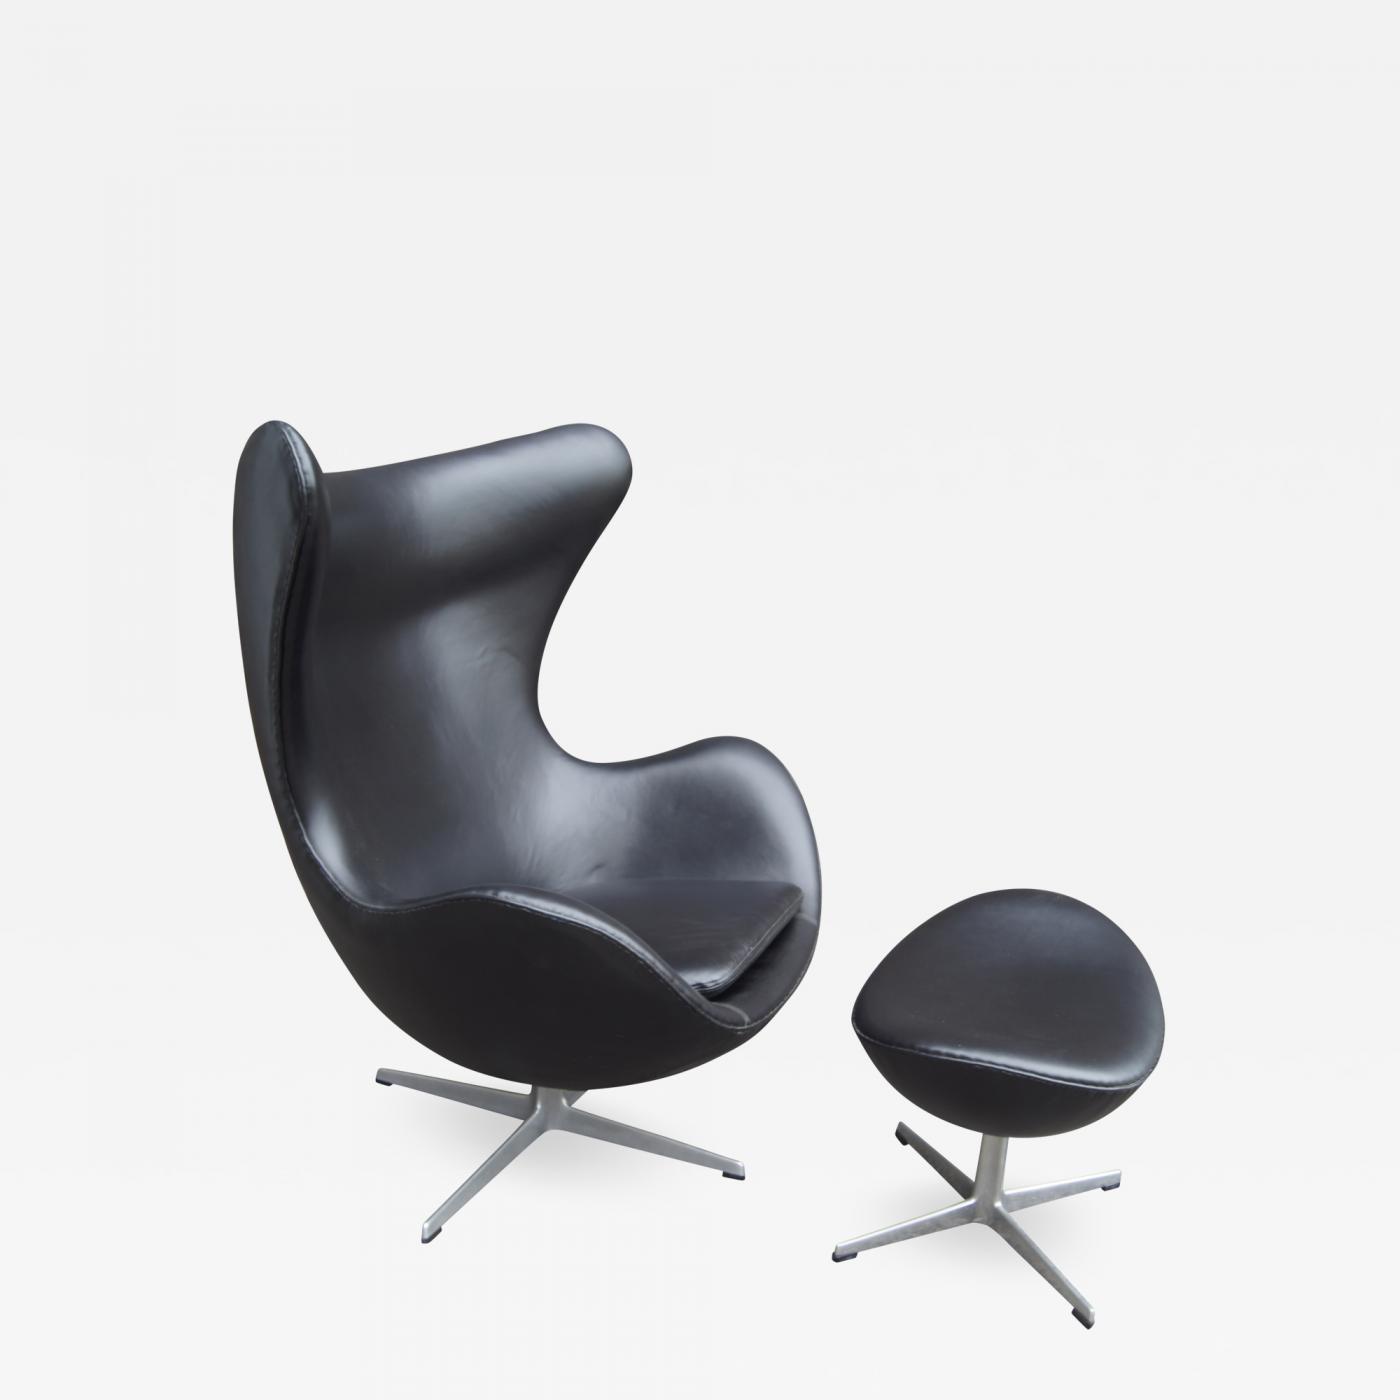 Arne Jacobsen Black Leather Egg Chair, Black Leather Egg Chair